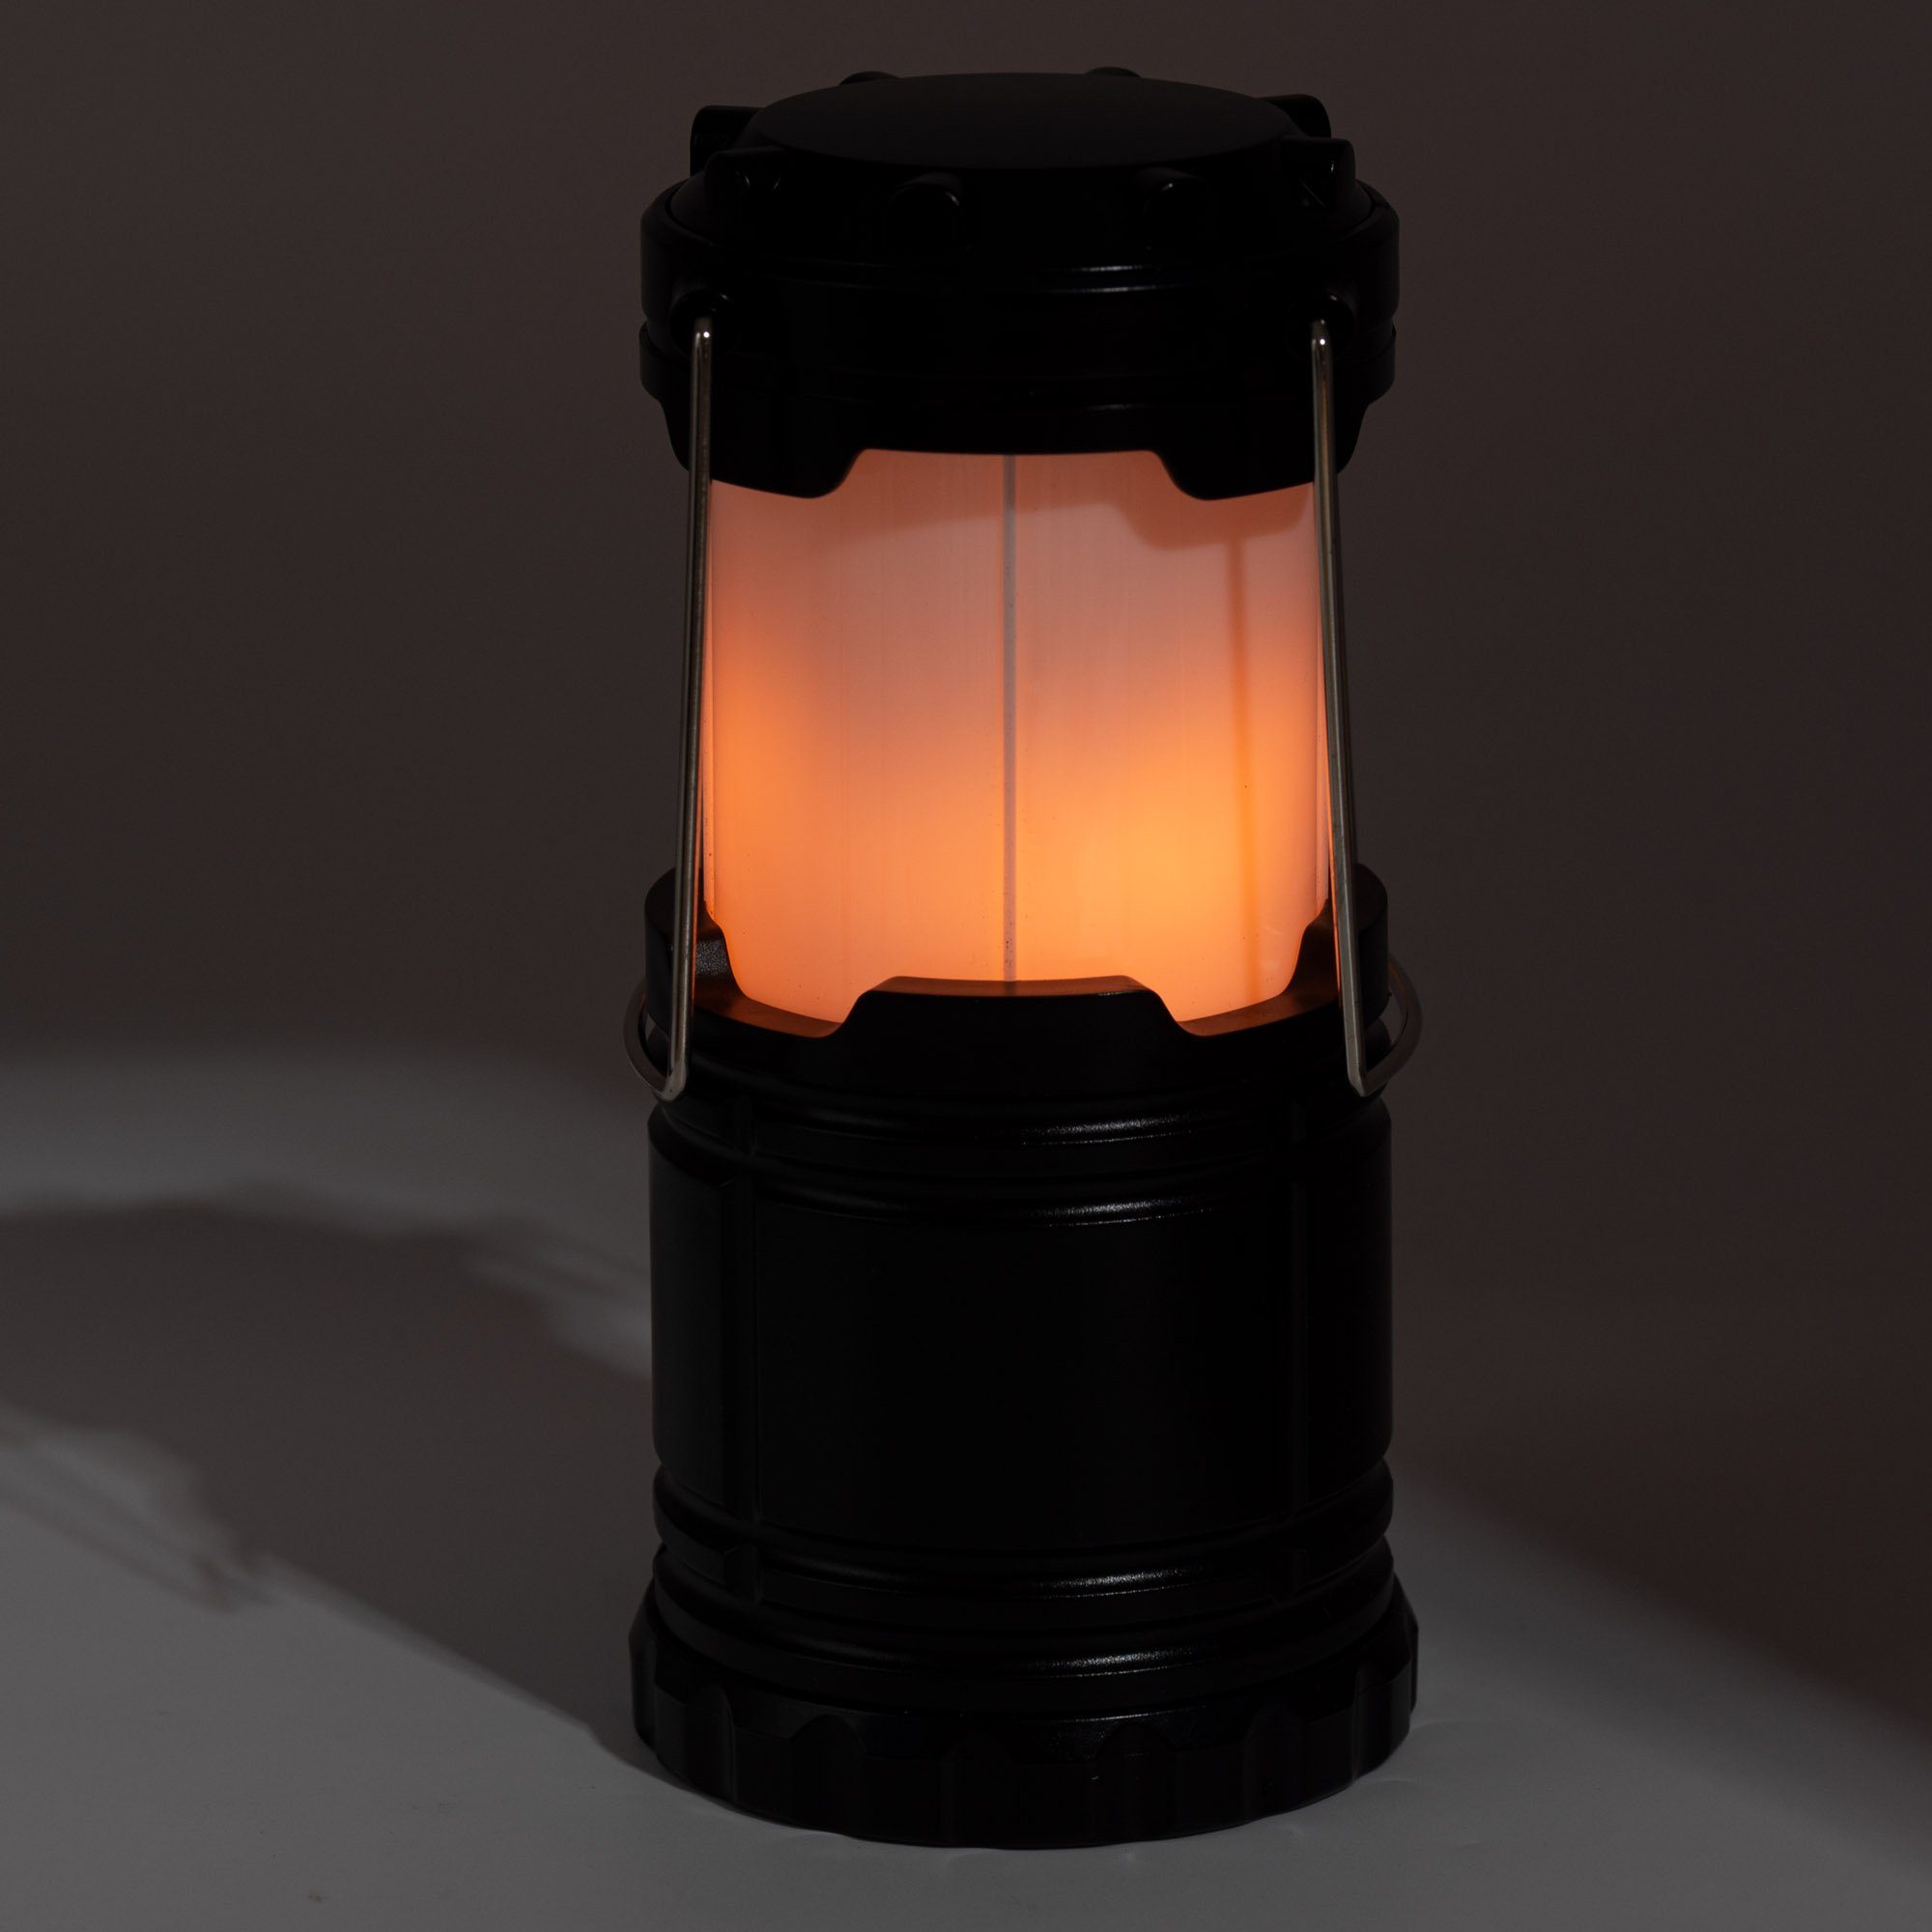 Batterie, Effekt Taschenlampe Leuchte Garten, Lampe BENSON Campinglampe Zelt LED Flammen, Laterne, 2in1